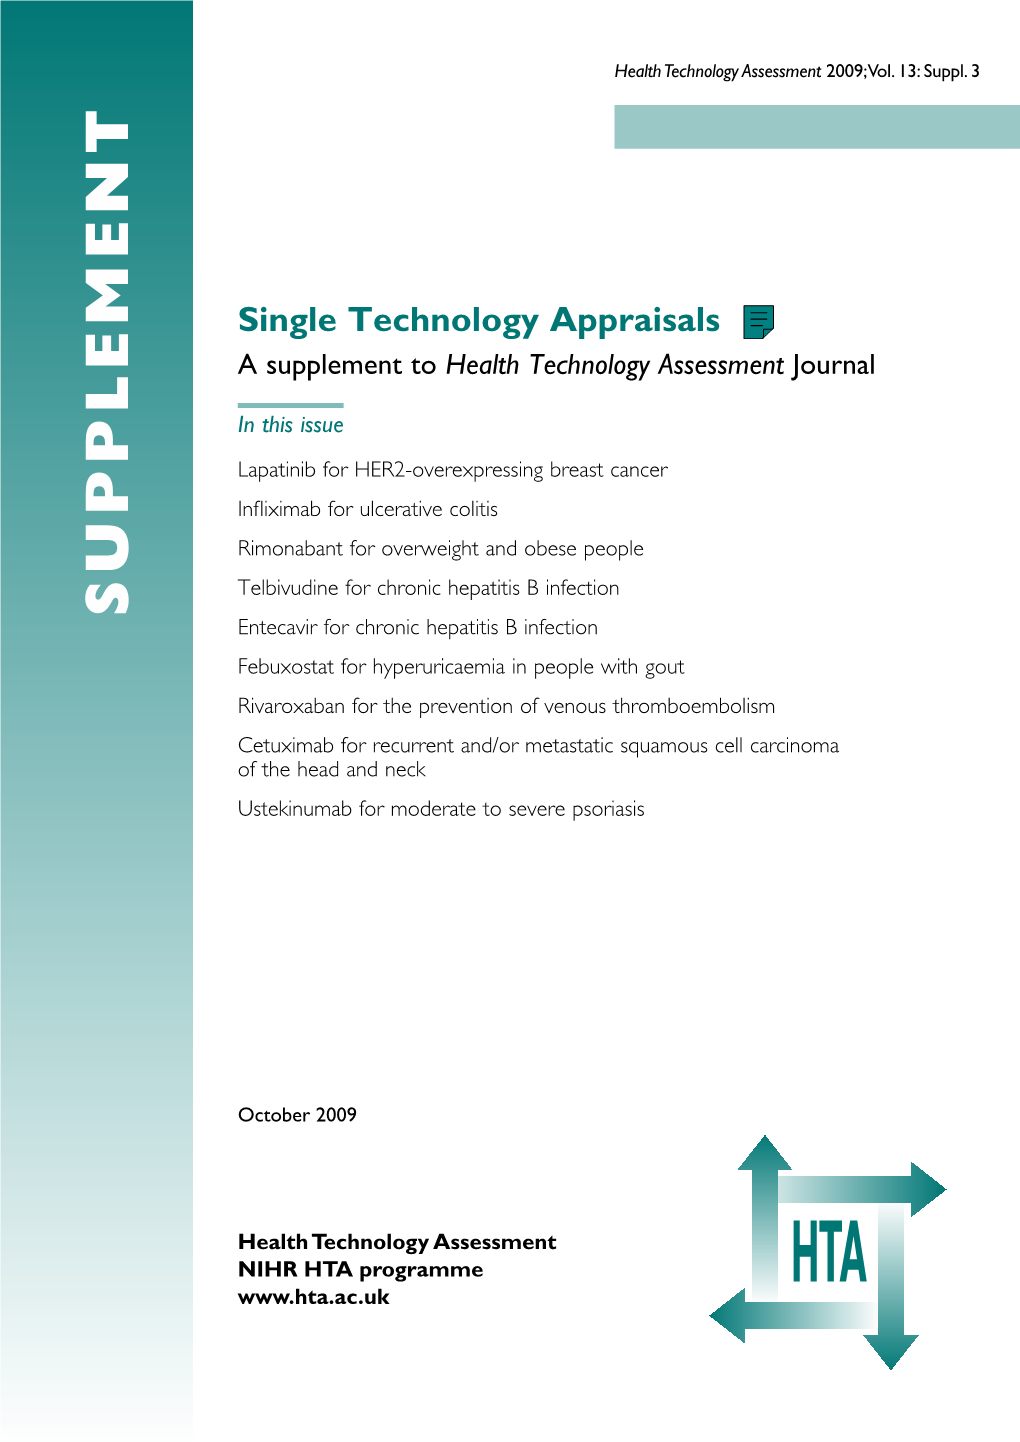 A Supplement to Health Technology Assessment Journal